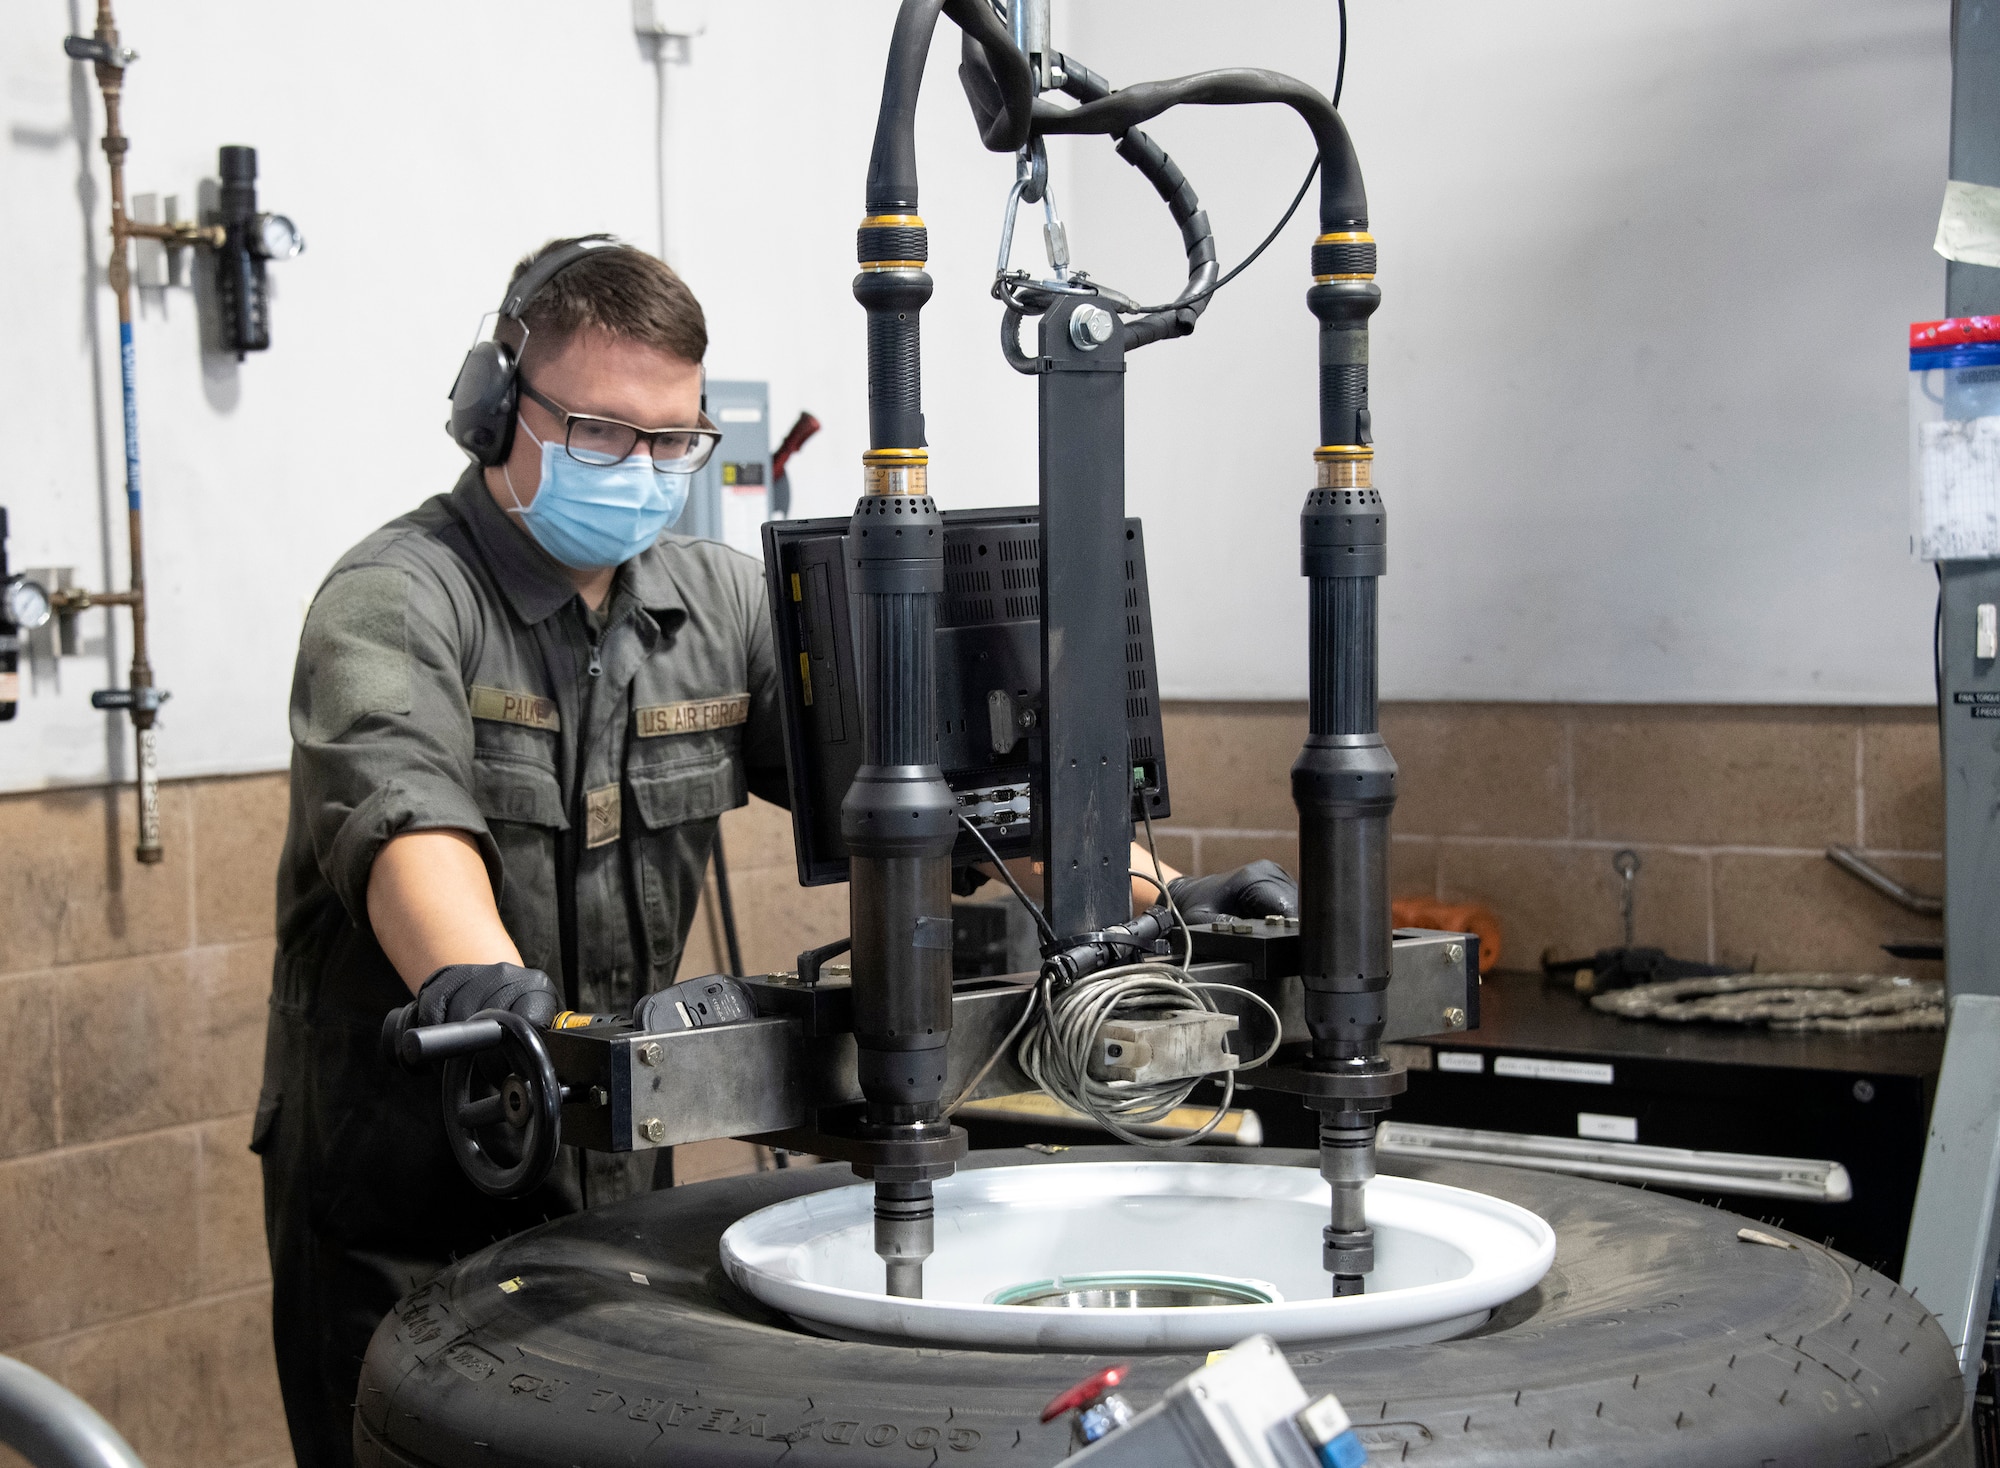 Senior Airman Joseph Palke, 60th Maintenance Squadron wheel and tire team member, uses a wheel assembly torquing system